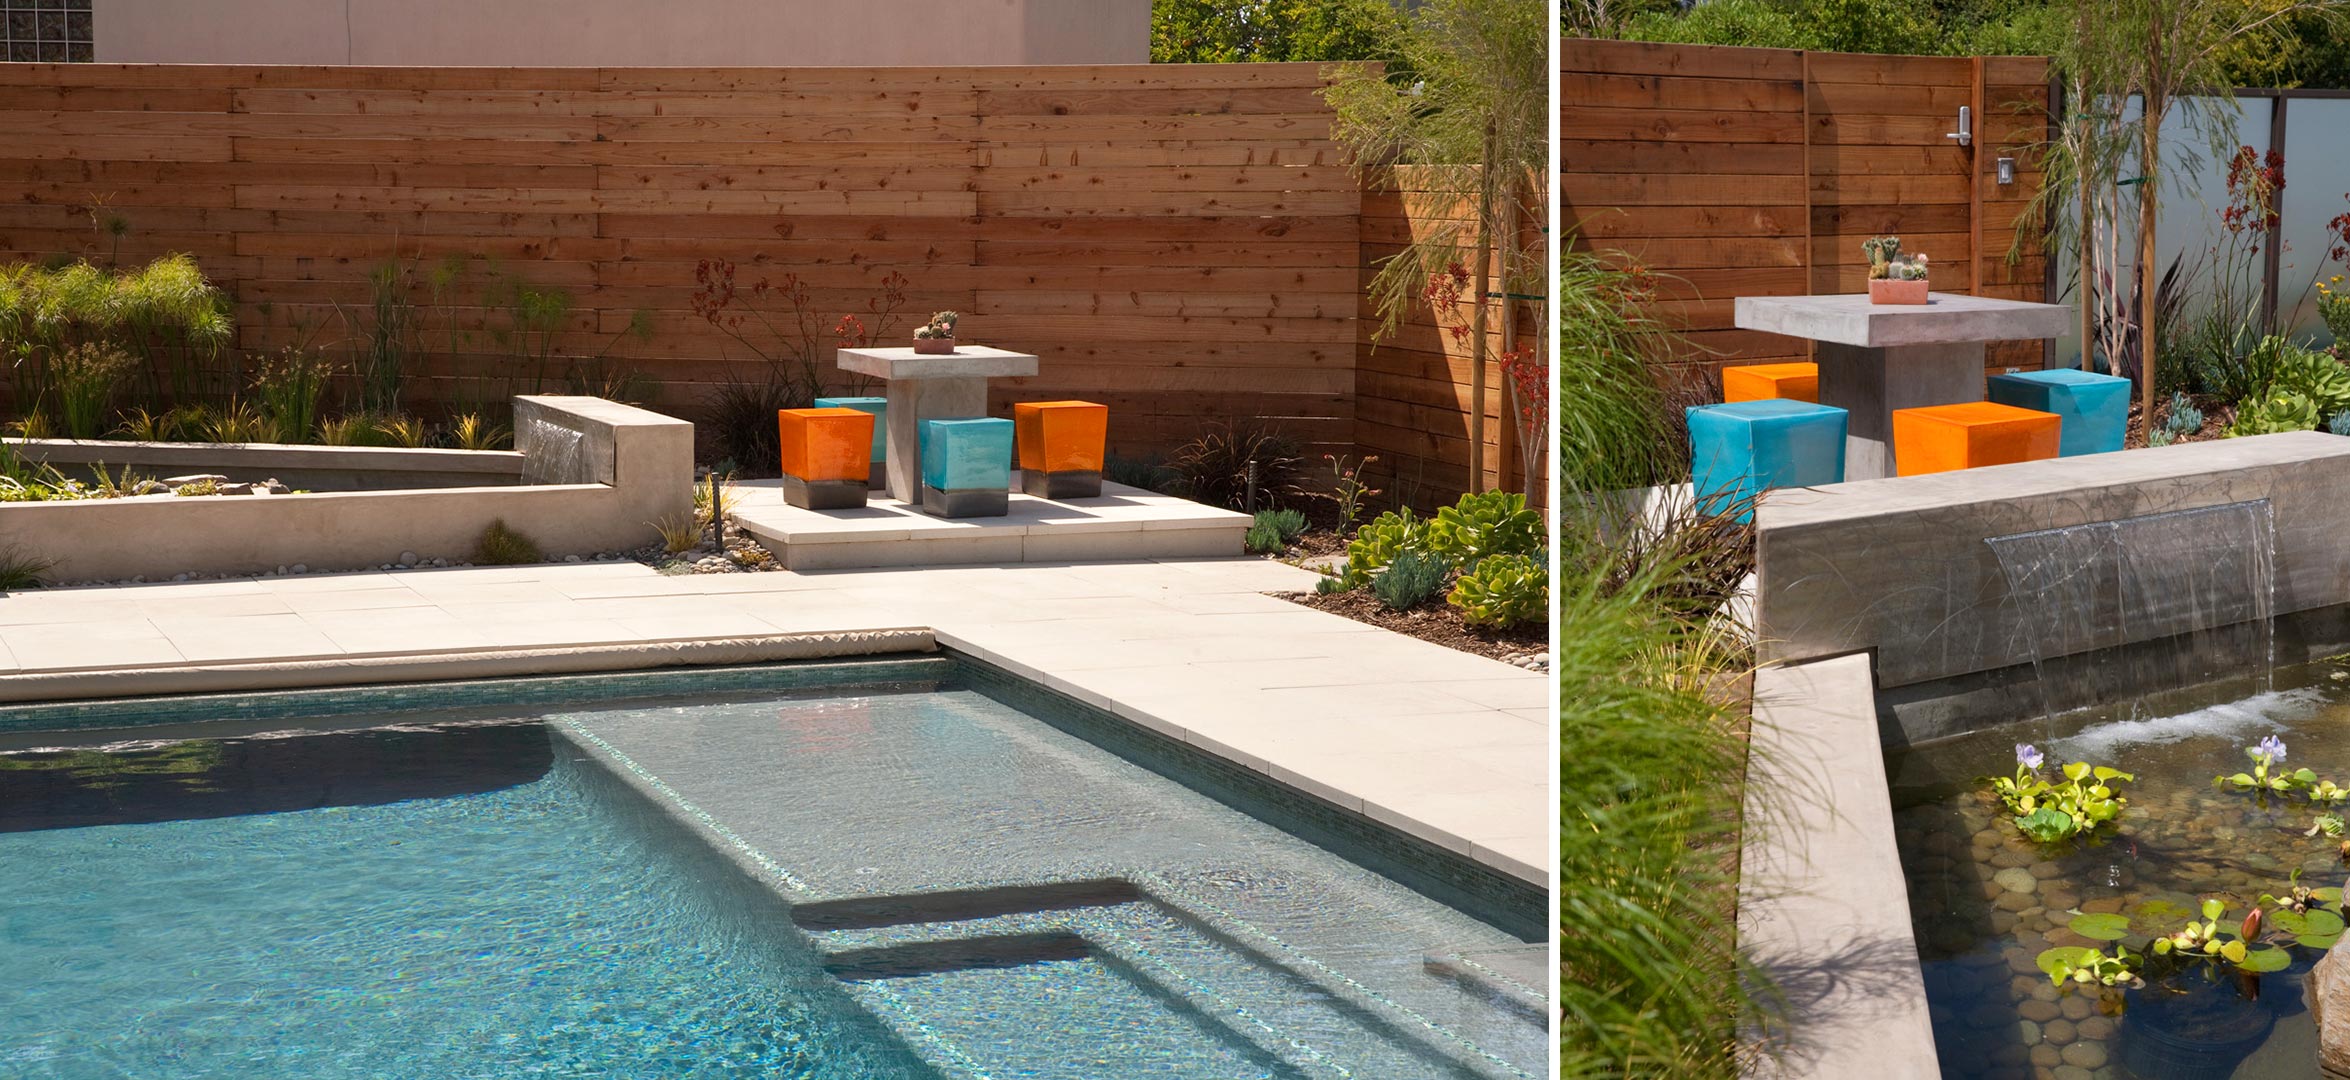 2-pool-colorful-concrete-furniture.jpg